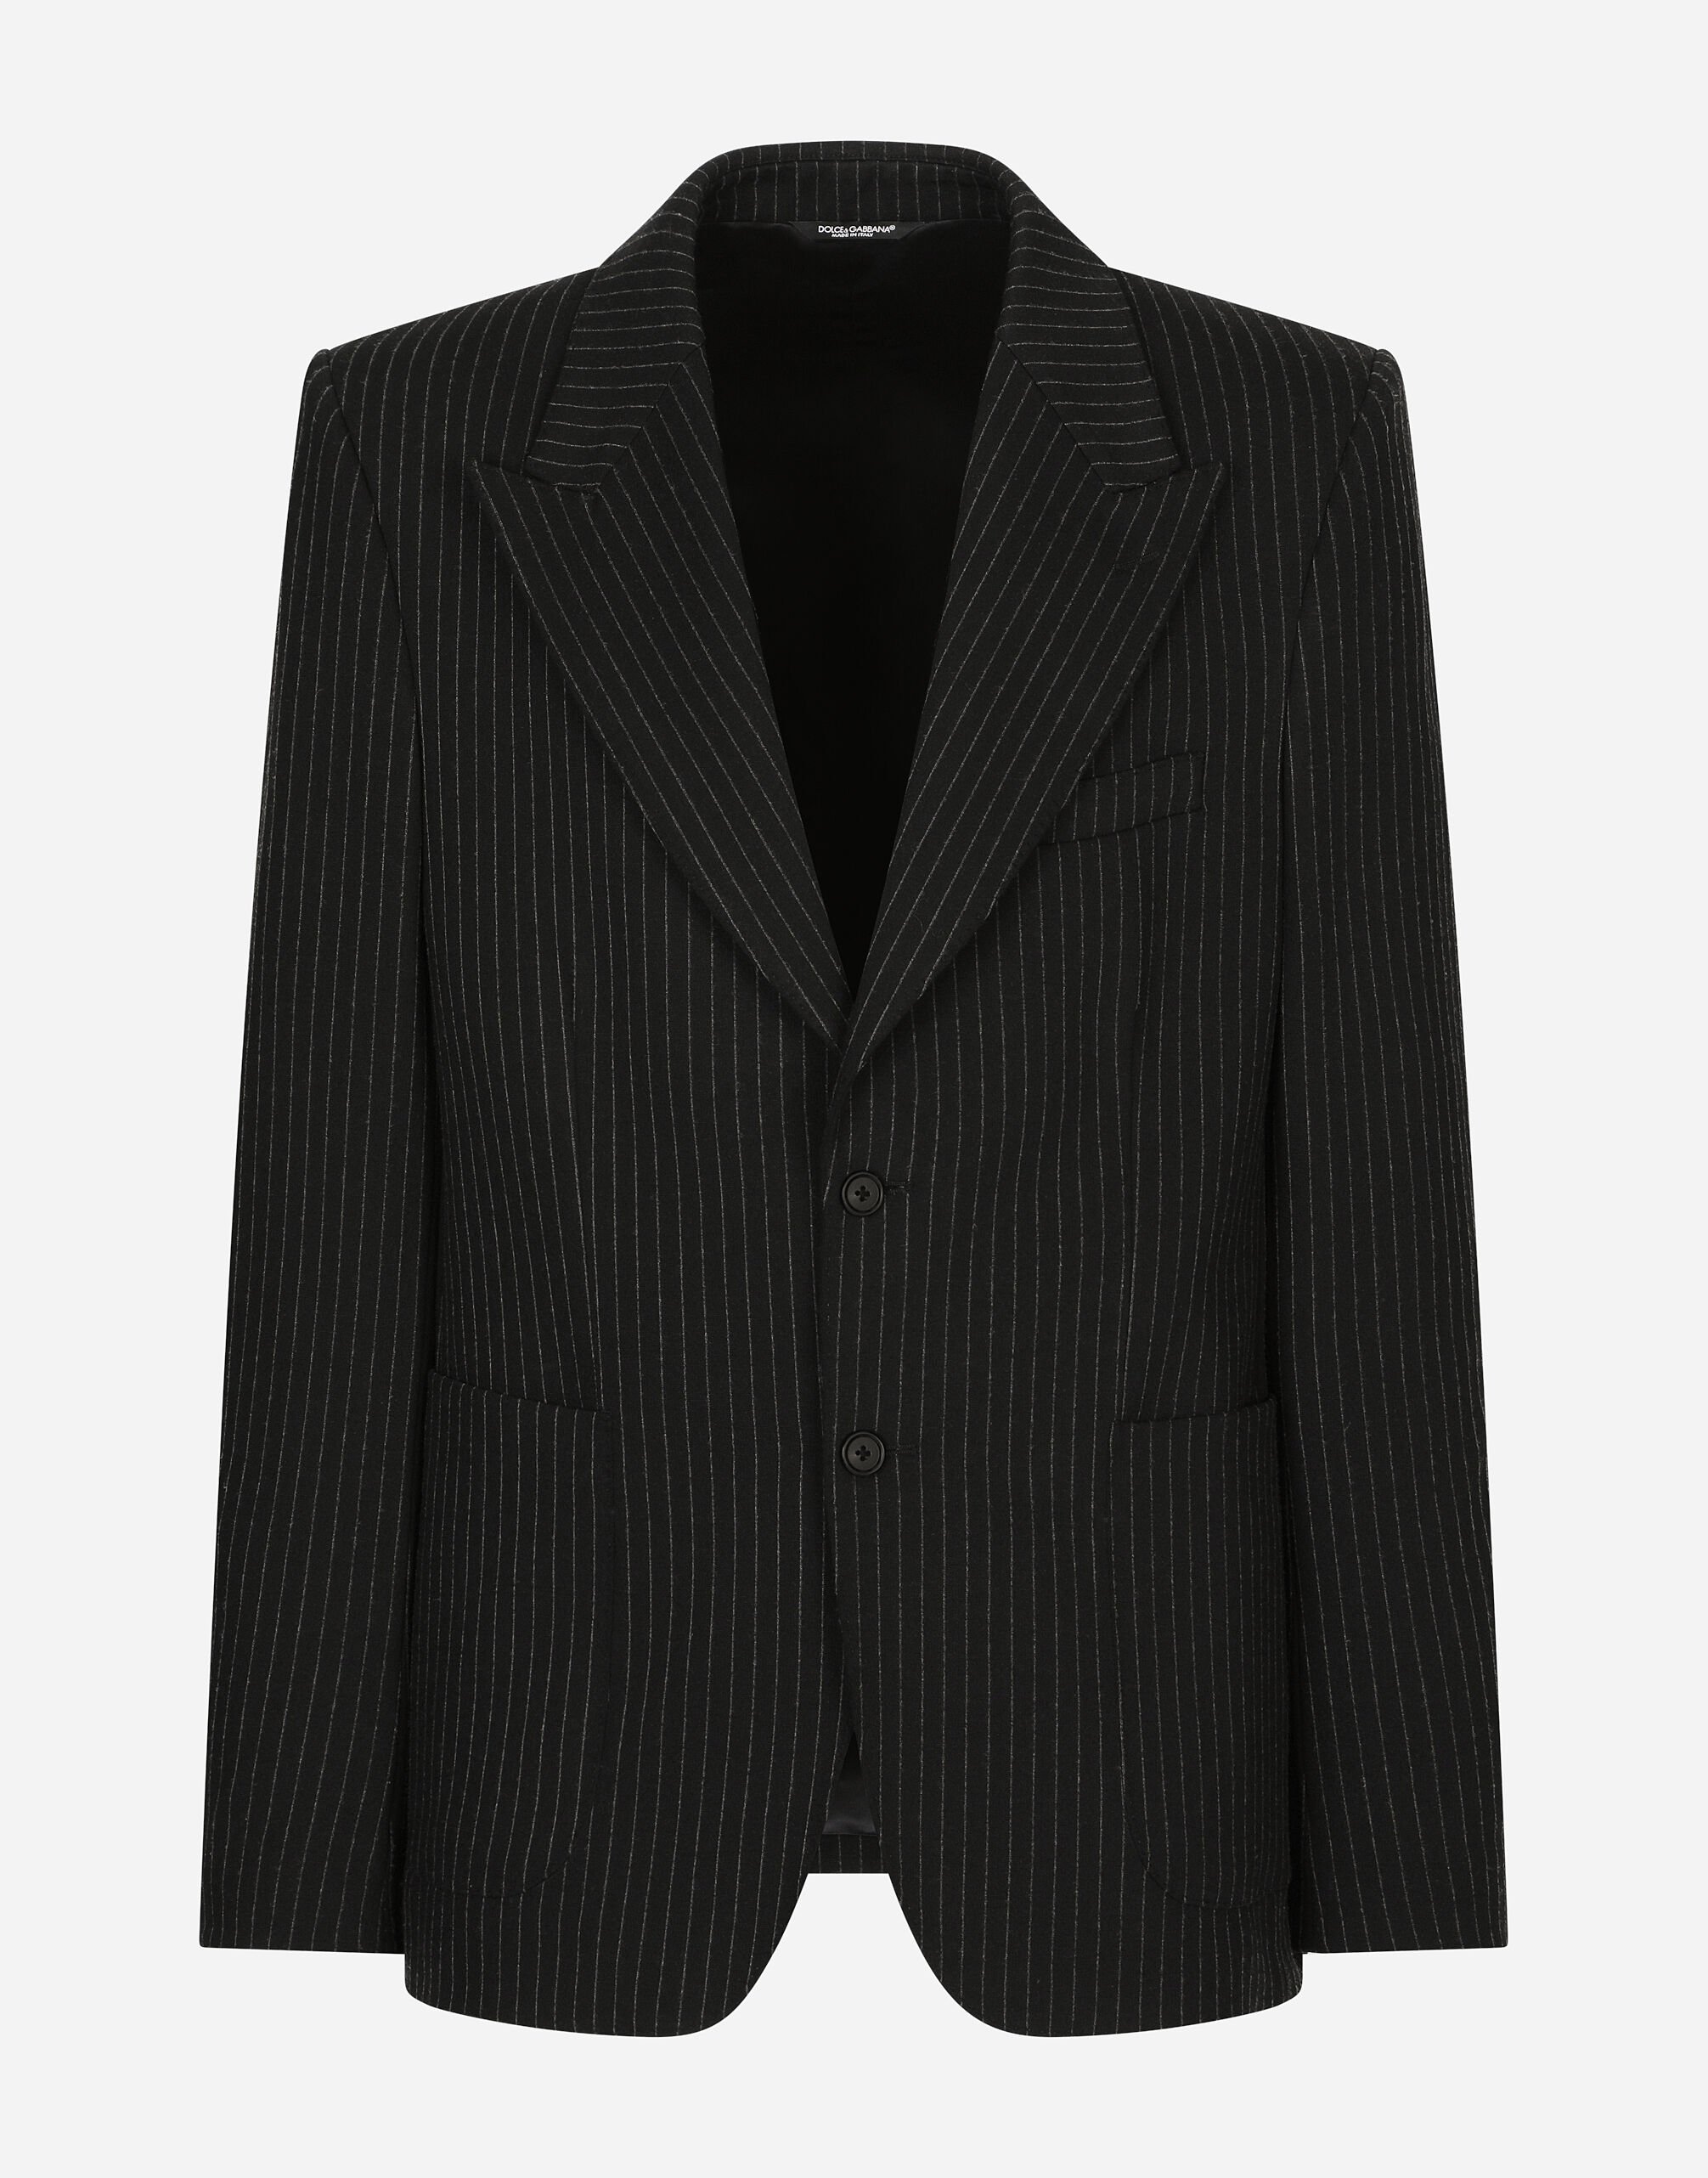 Dolce & Gabbana Pinstripe stretch jersey jacket Black G002ETGF177